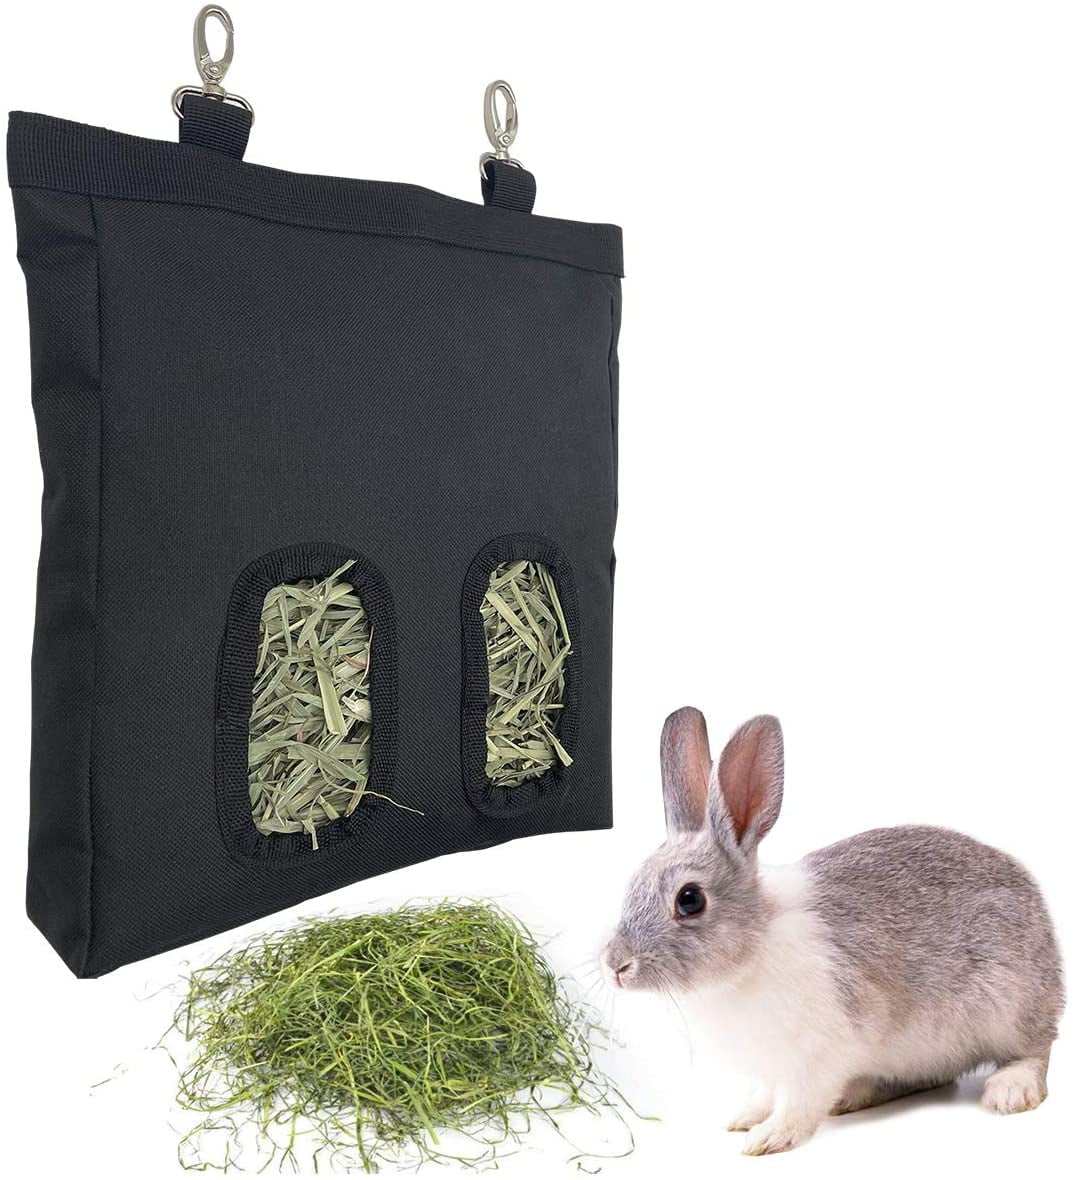 Details about   Rabbit Guinea Pig Hay Feeder Bag Small Animals Hay Feeder Hanging Storage Nylon 